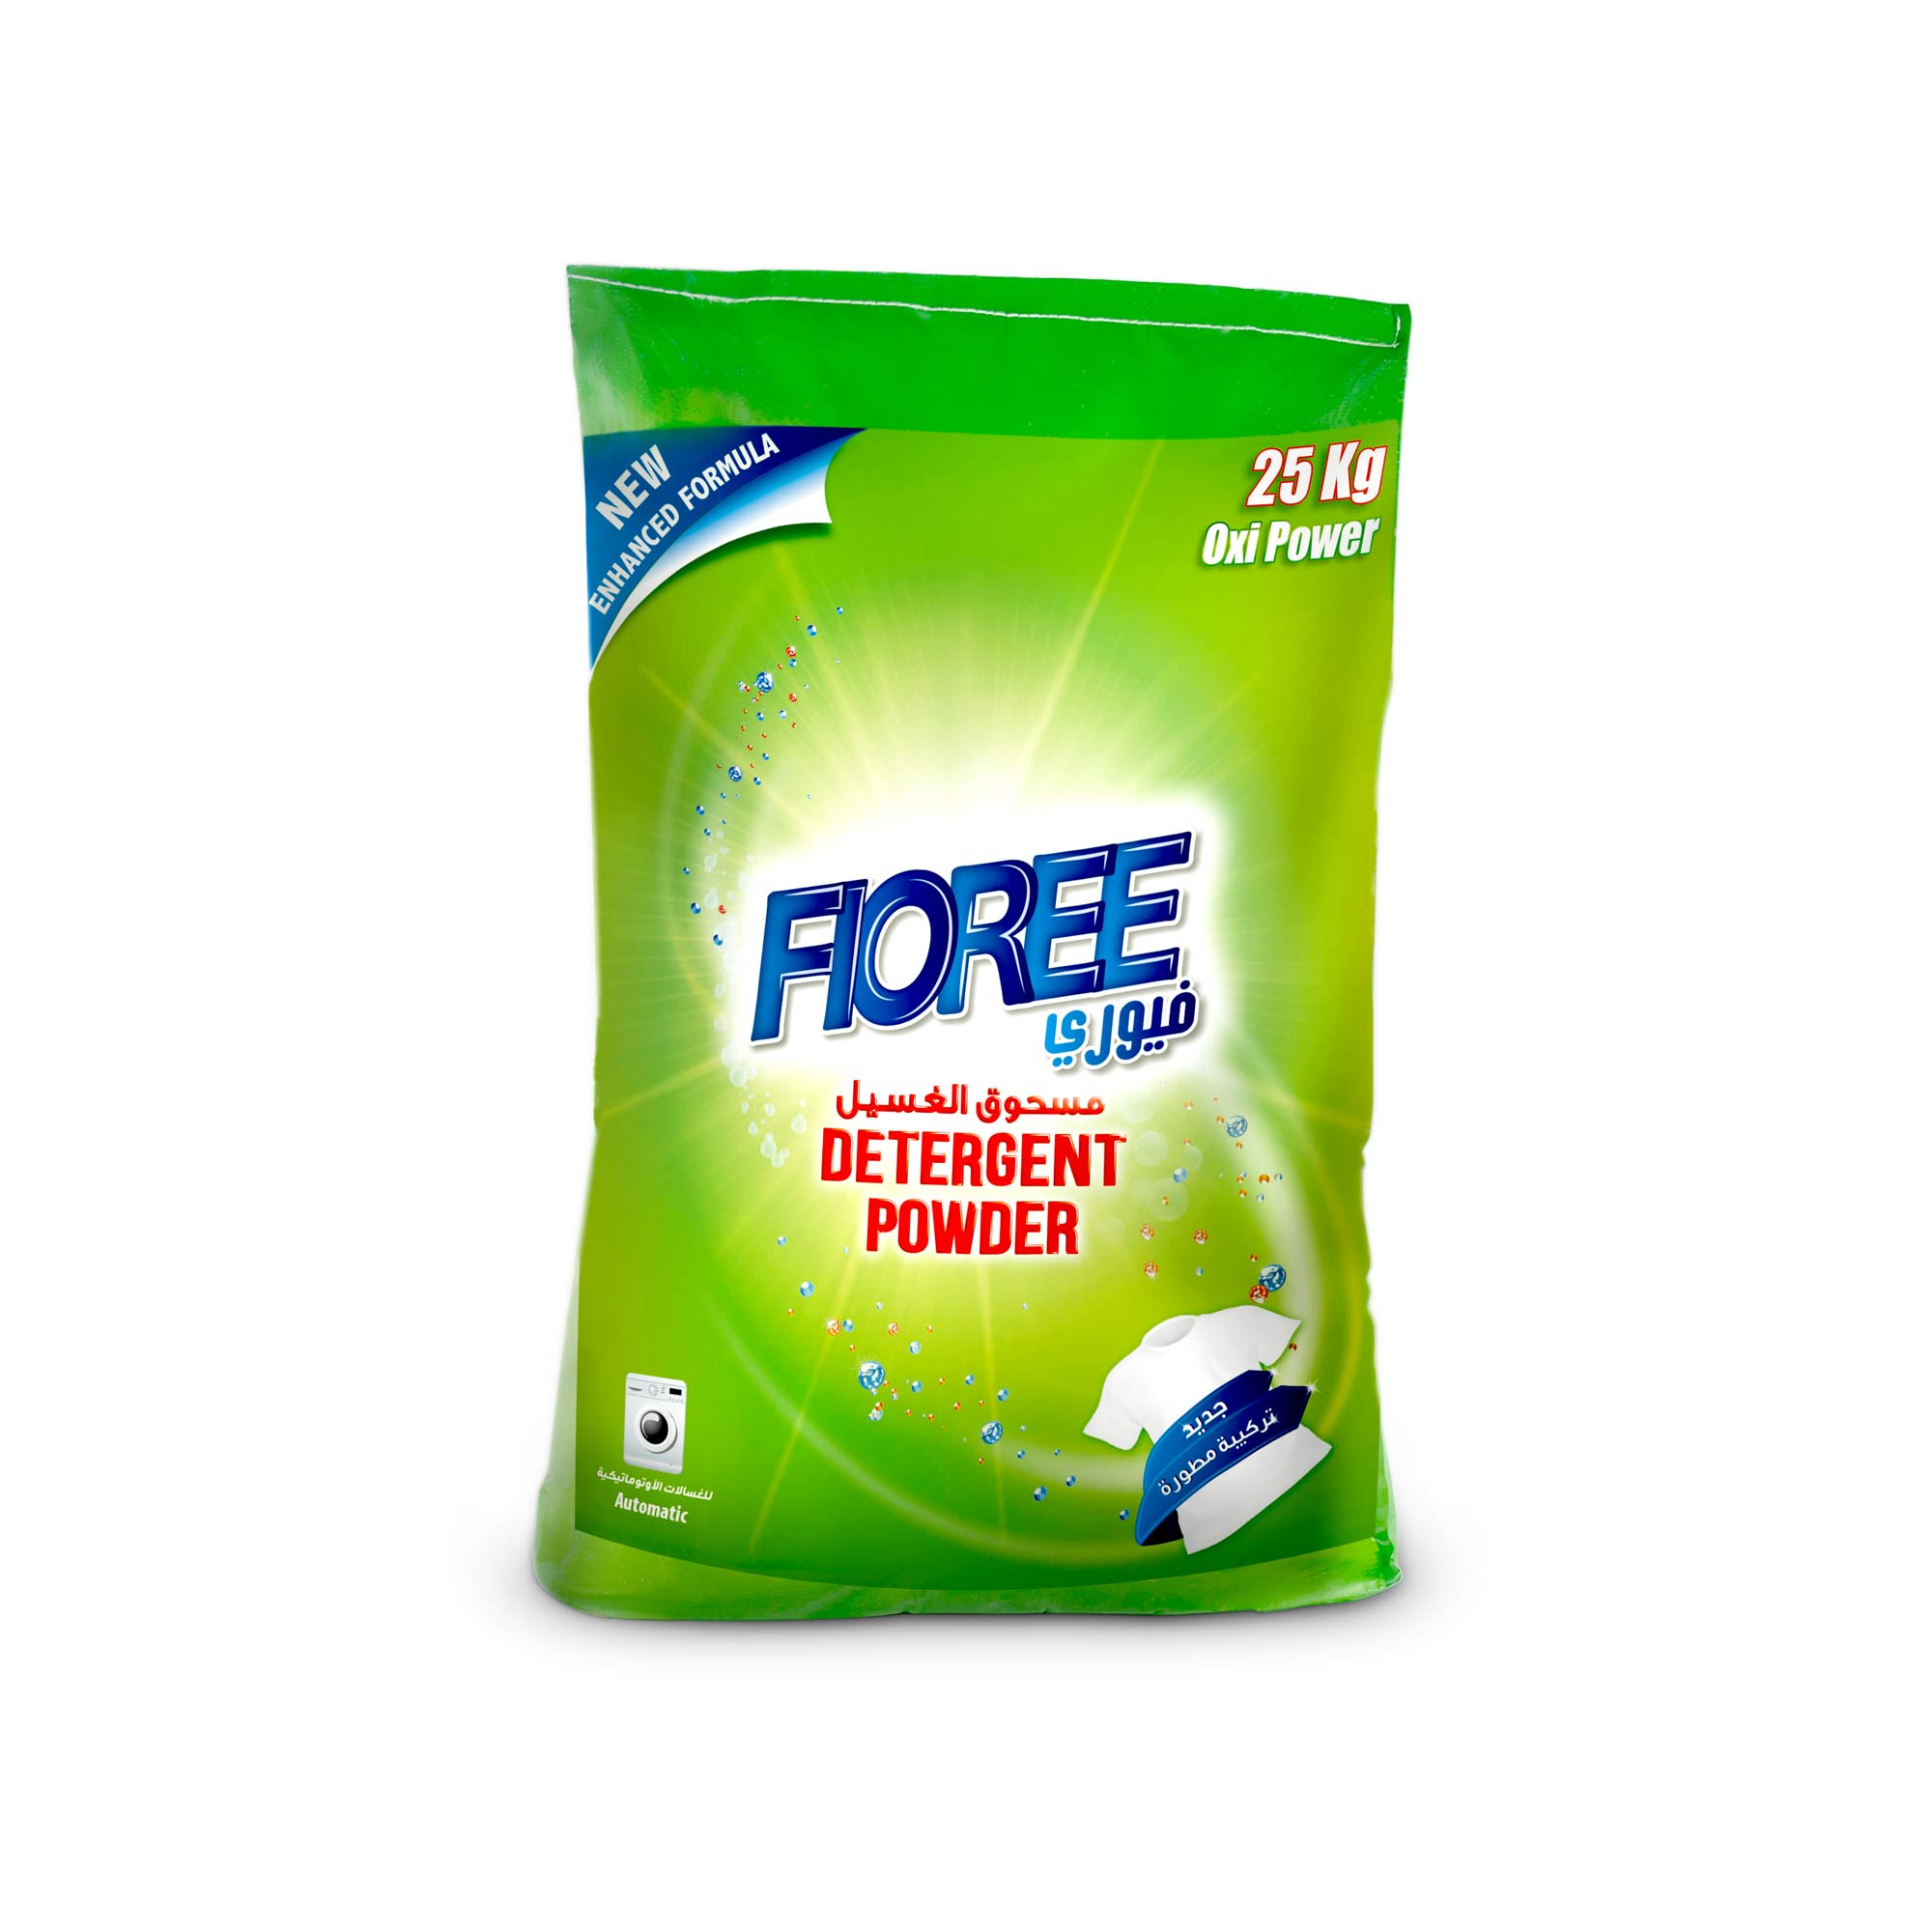 Fioree Detergent Powder (Oxi Power,  25 kg Woven Bag)